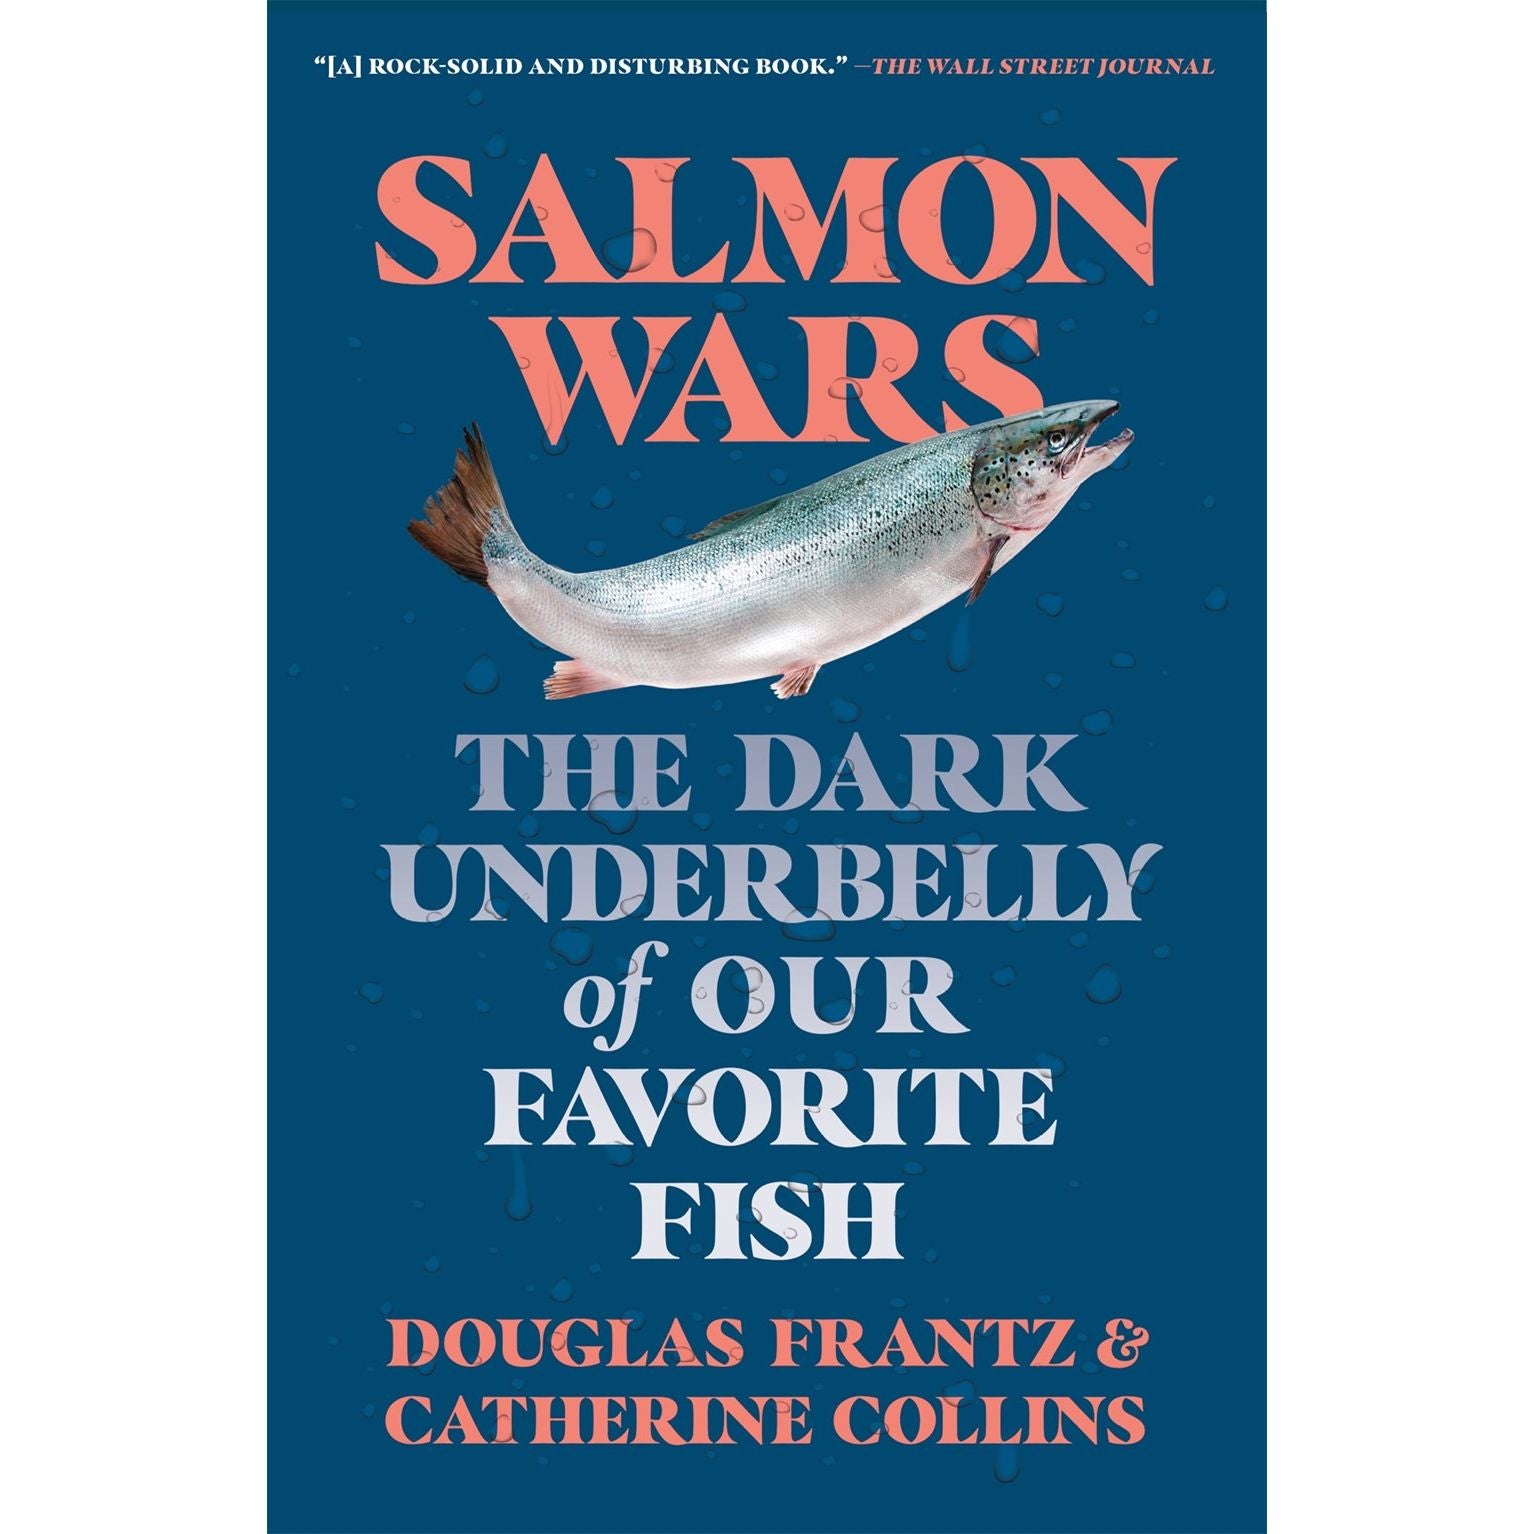 Salmon Wars: The Dark Underbelly of Our Favorite Fish (Douglas Frantz &  Catherine Collins)